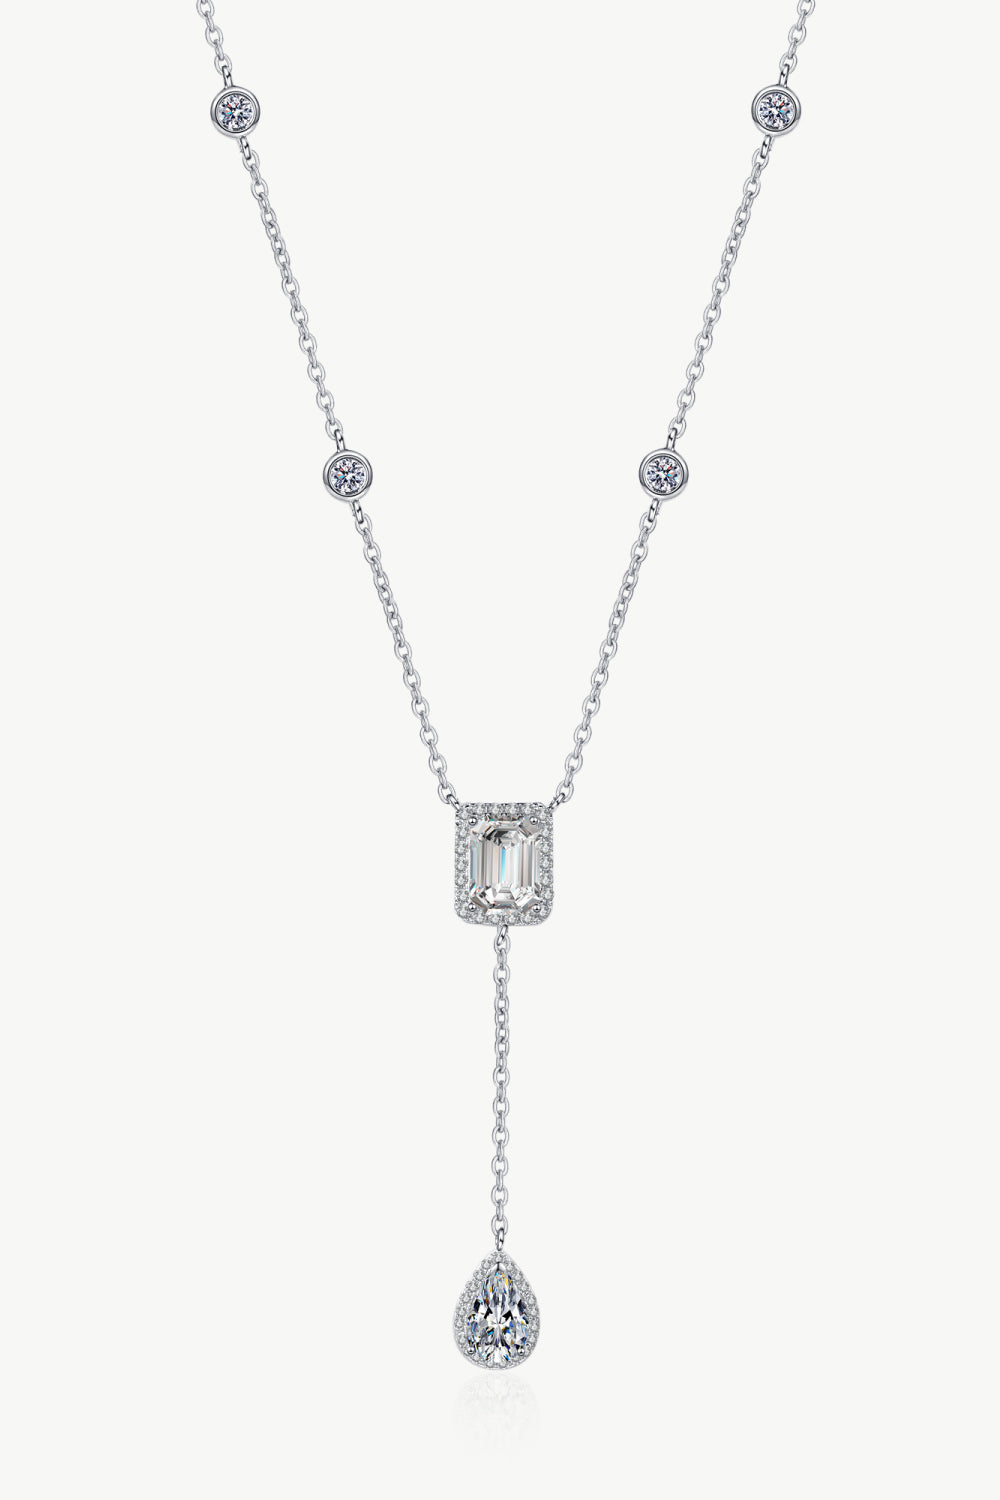 3 Carat 925 Sterling Silver Double Drop Pendant Necklace